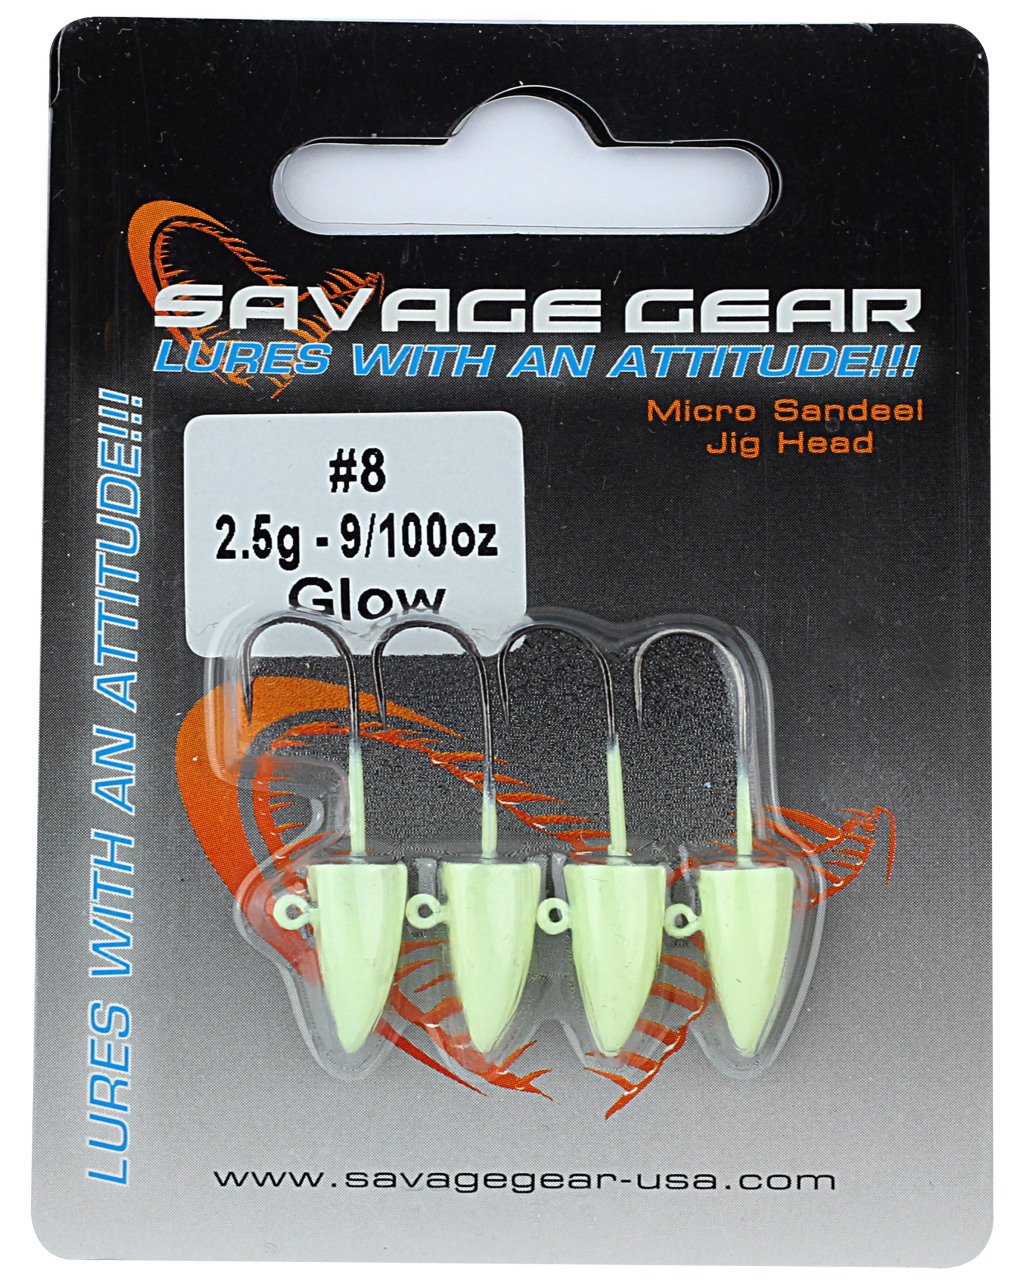 Savage gear LRF Micro sandeel jigghead 2.5g #8 4pcs Glow Suni Yem